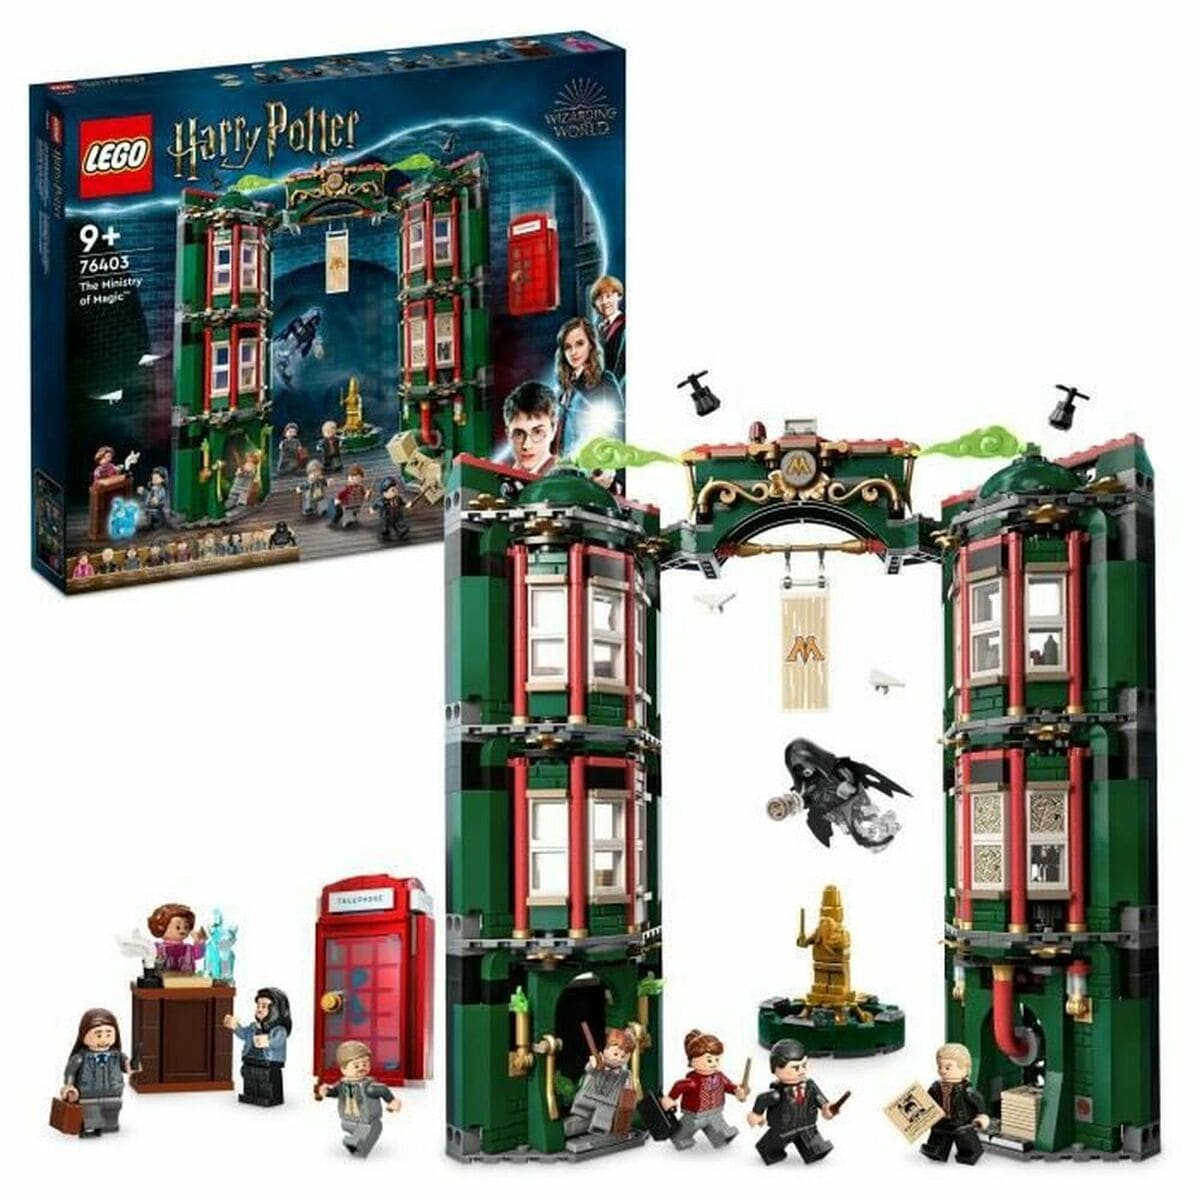 Lego Spielzeug | Kostüme > Spielzeug und Spiele > Weiteres spielzeug Playset Lego  76403 Harry Potter The Ministry of Magic